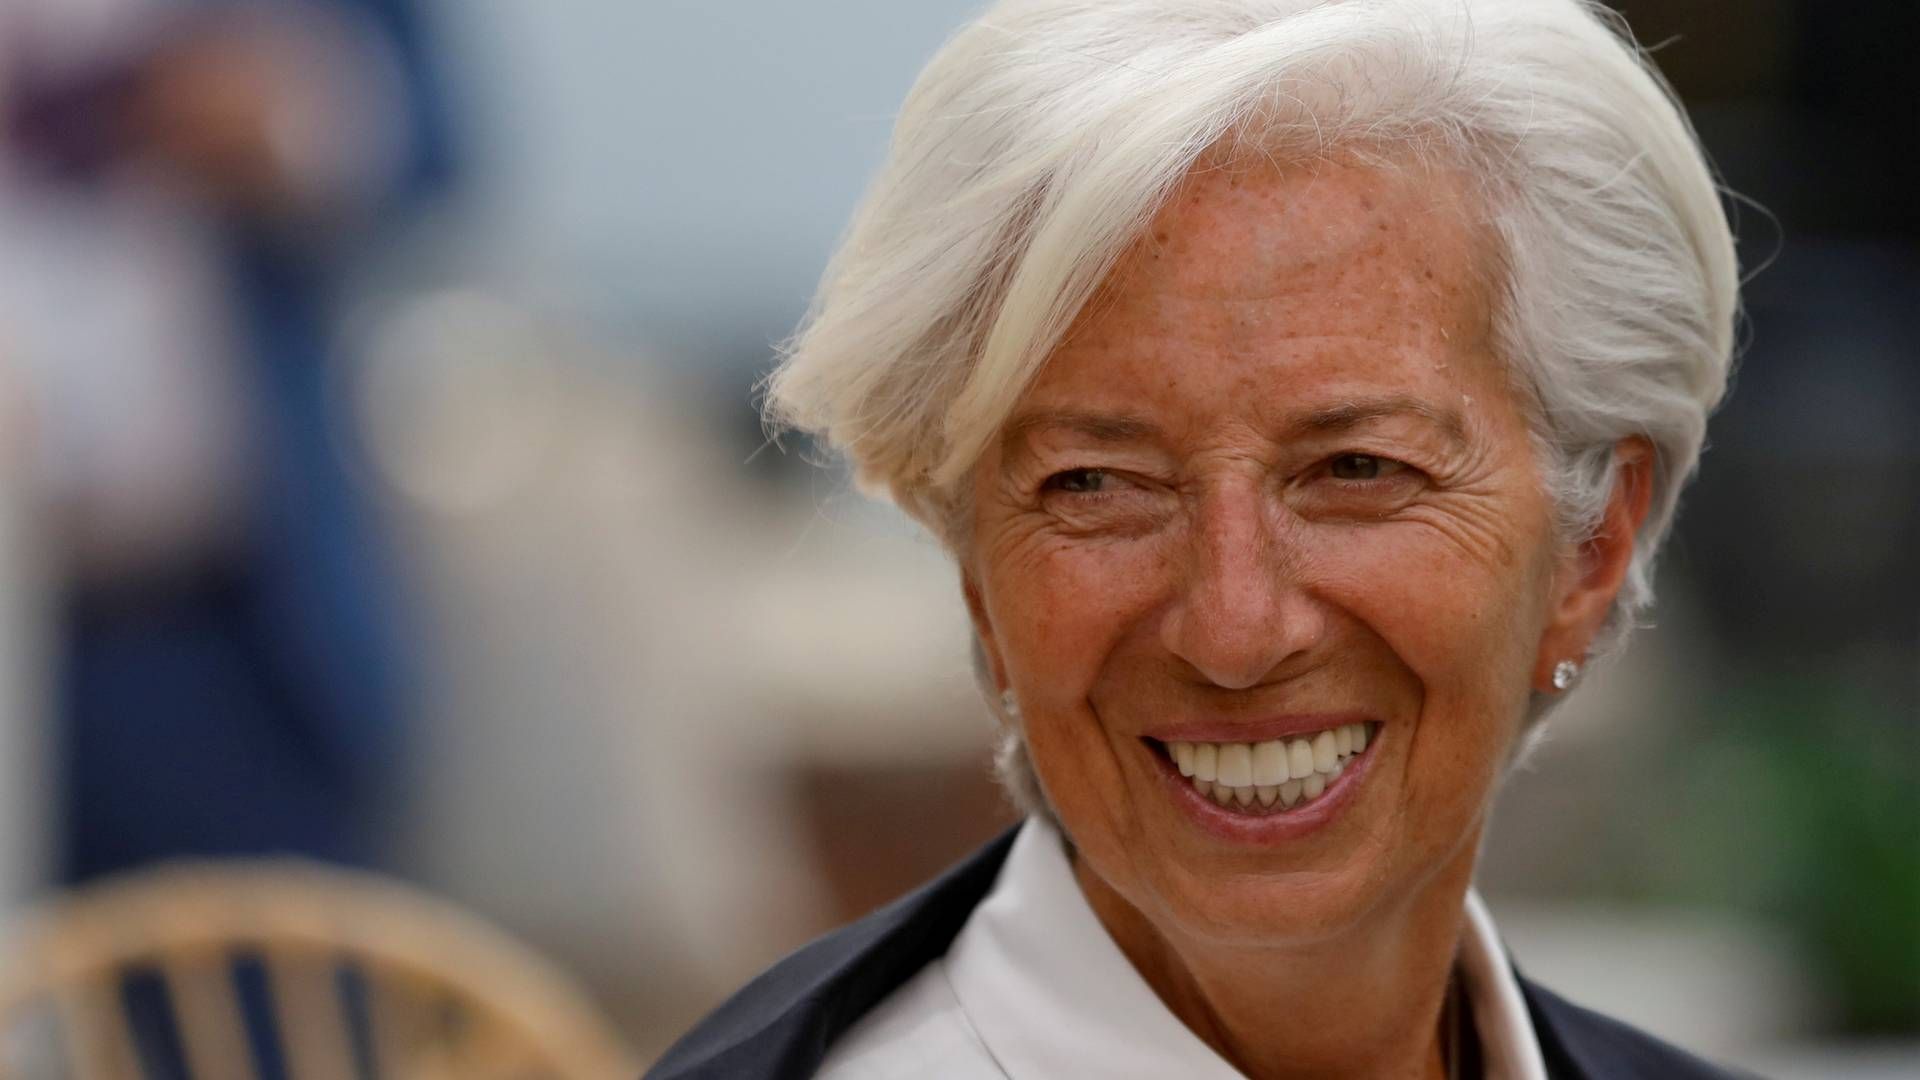 Chefen for Den Internationale Valutafond (IMF), franskmanden Christine Lagarde. | Foto: Carlos Jasso / Reuters